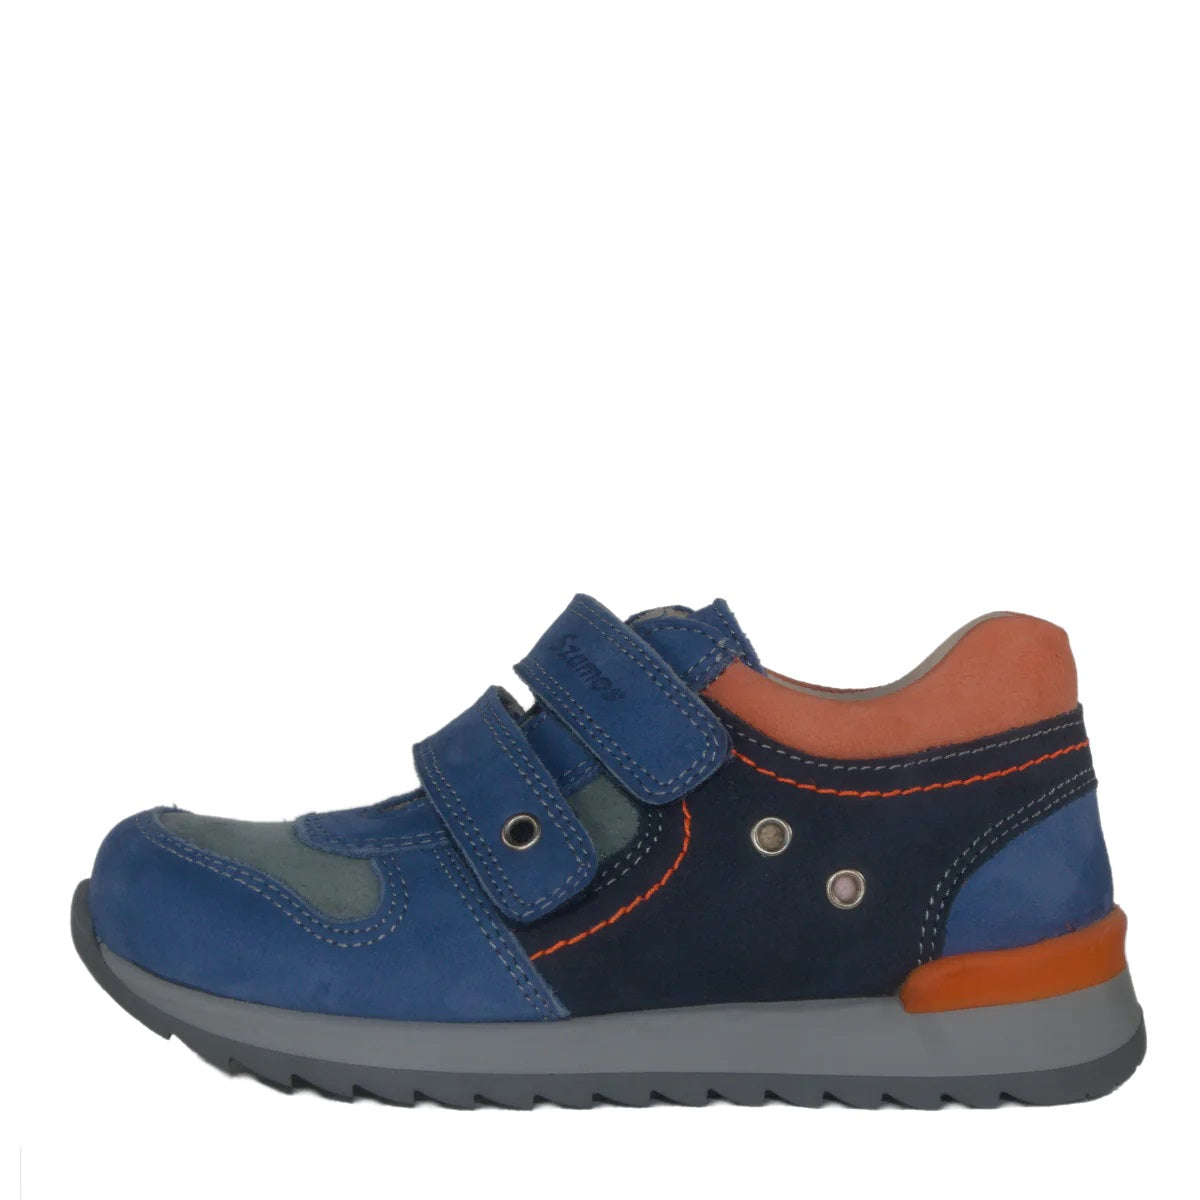 Szamos kid boy sneakers light and navy blue with orange heel liner little kid/big kid size